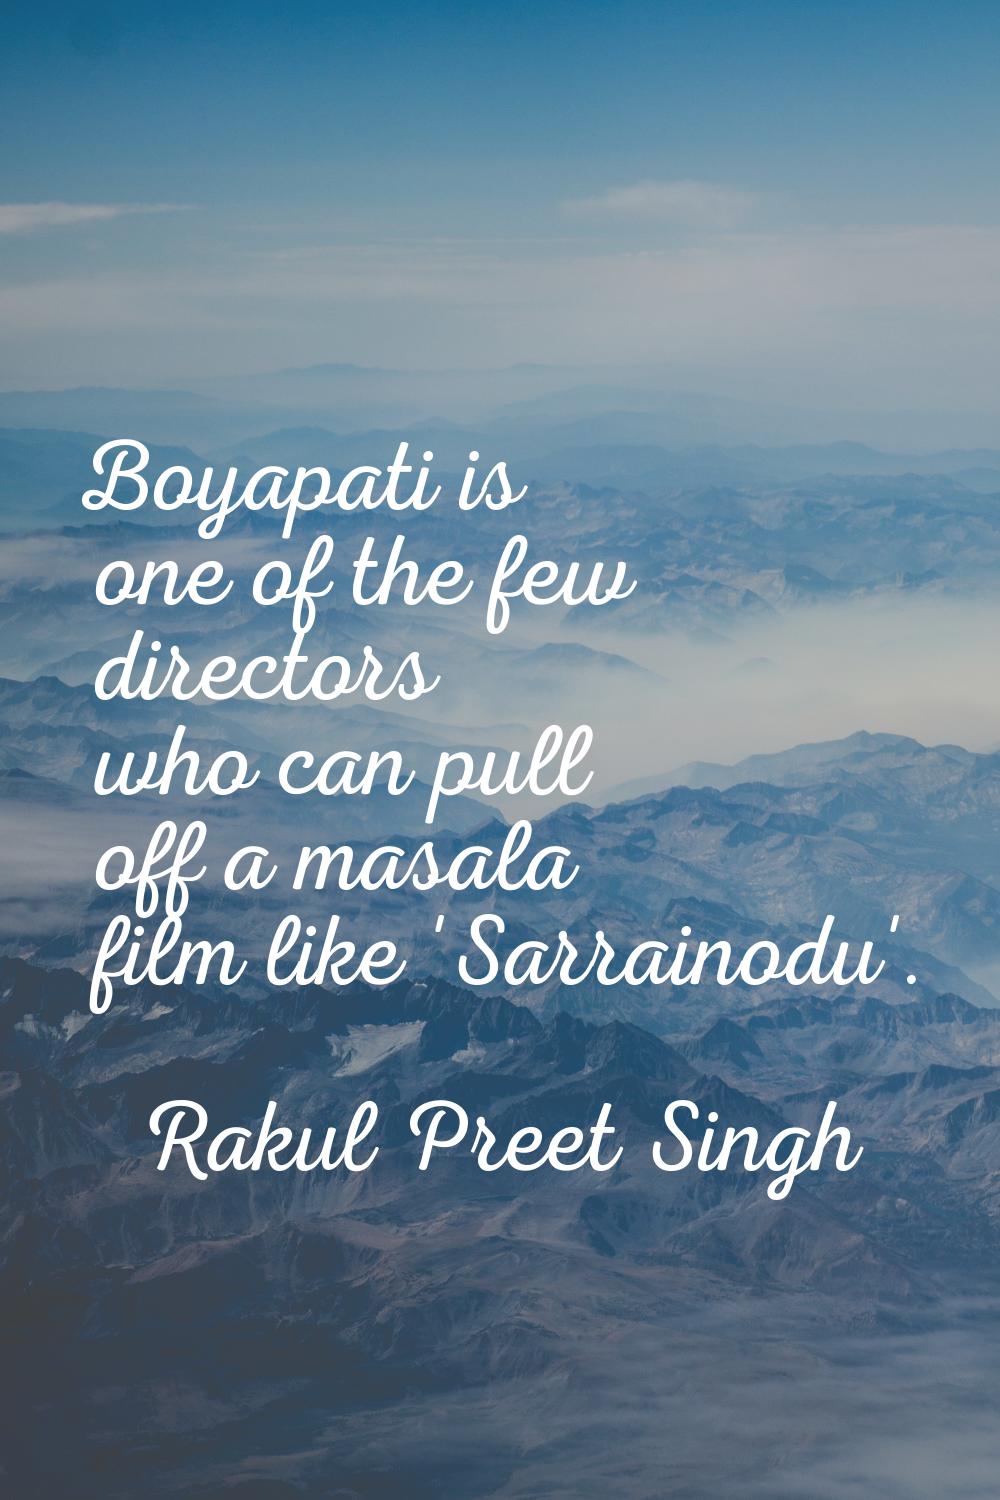 Boyapati is one of the few directors who can pull off a masala film like 'Sarrainodu'.